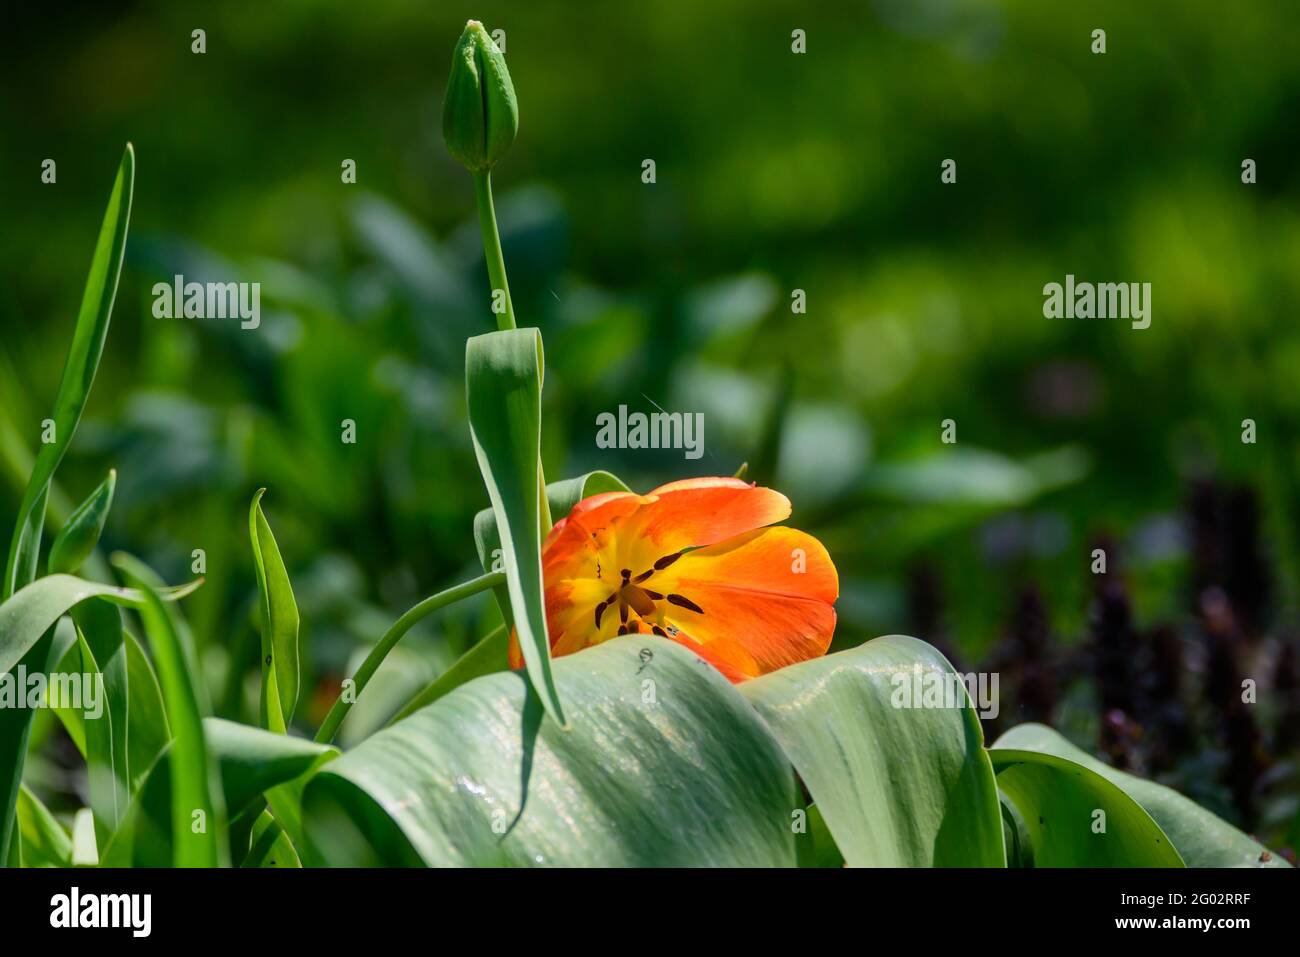 Selective focus photo. Orange tulip flower behind green leafs. Stock Photo